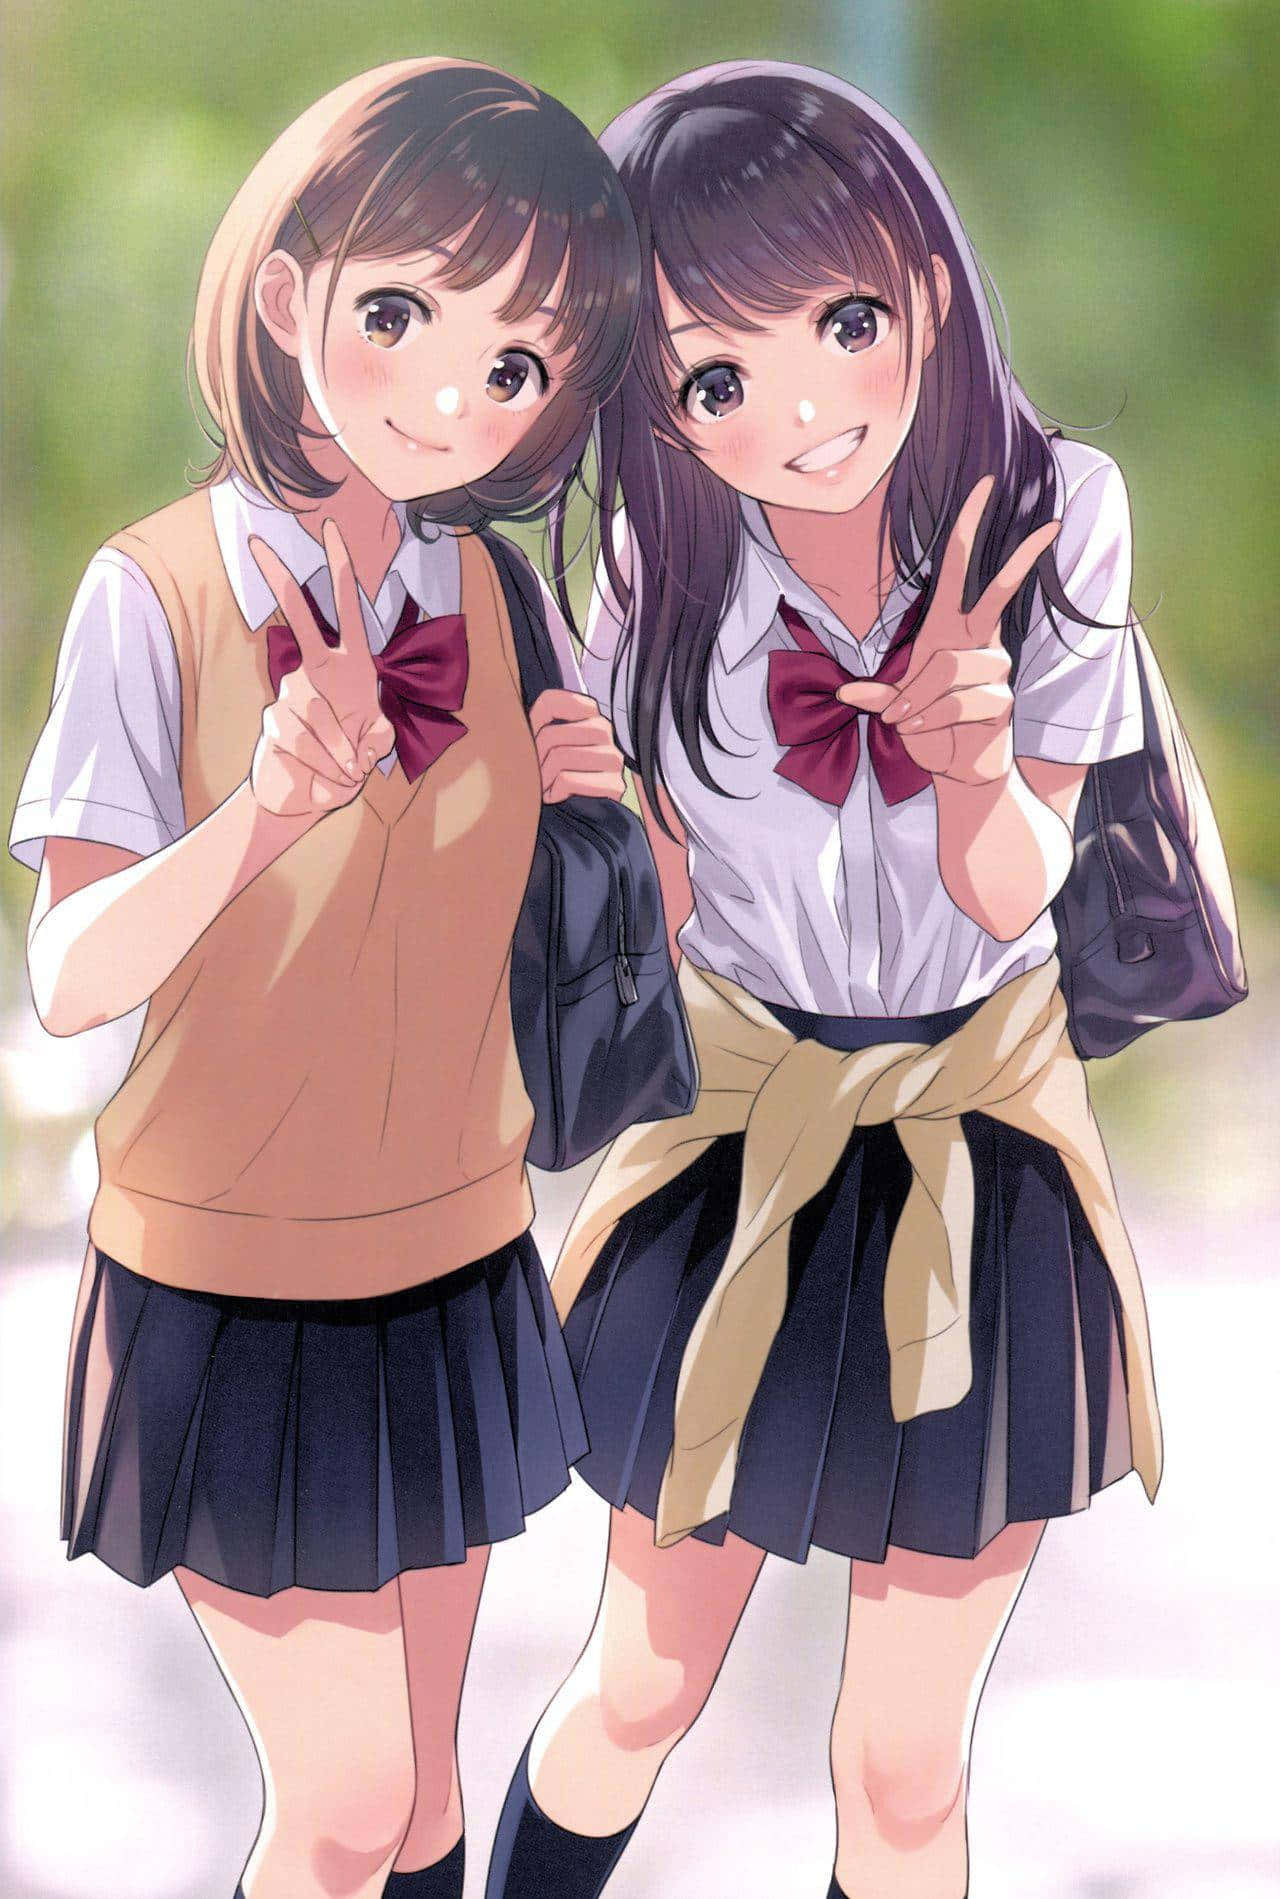 Matching Anime Girls Peace Sign Wallpaper